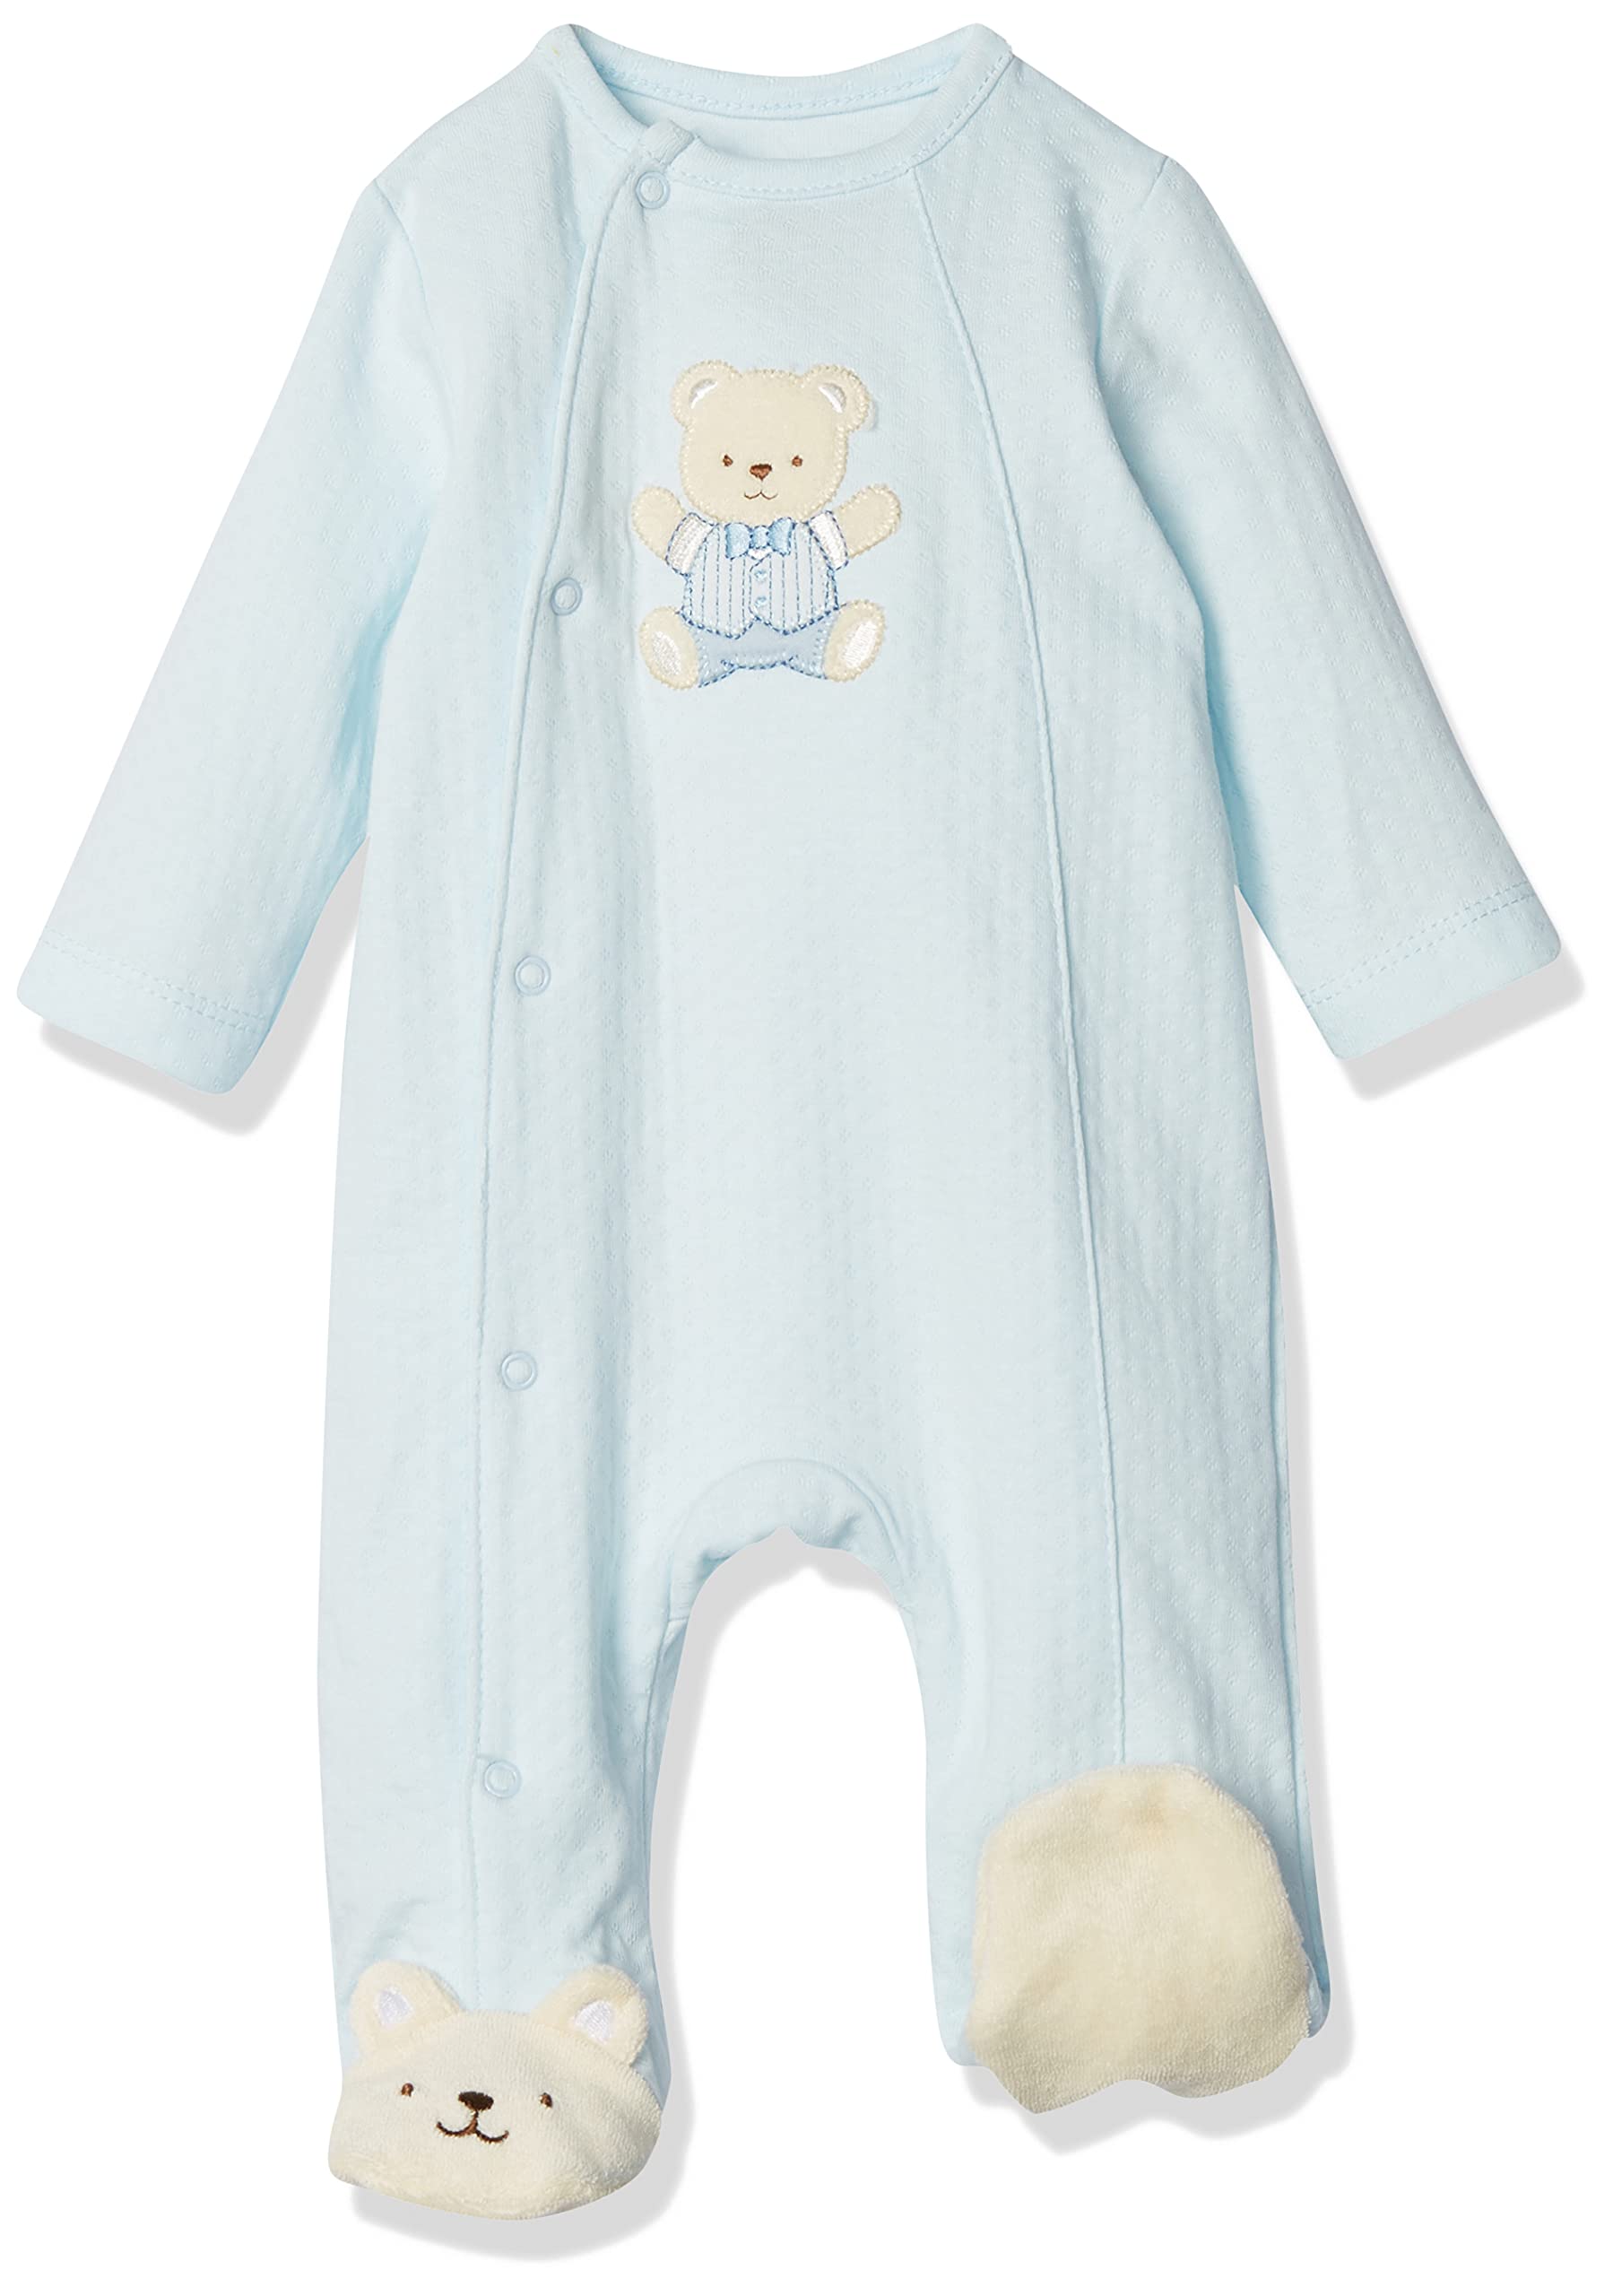 Little Me Footie Pajamas Cotton Baby Sleepwear Boys and Girls Footed Sleeper